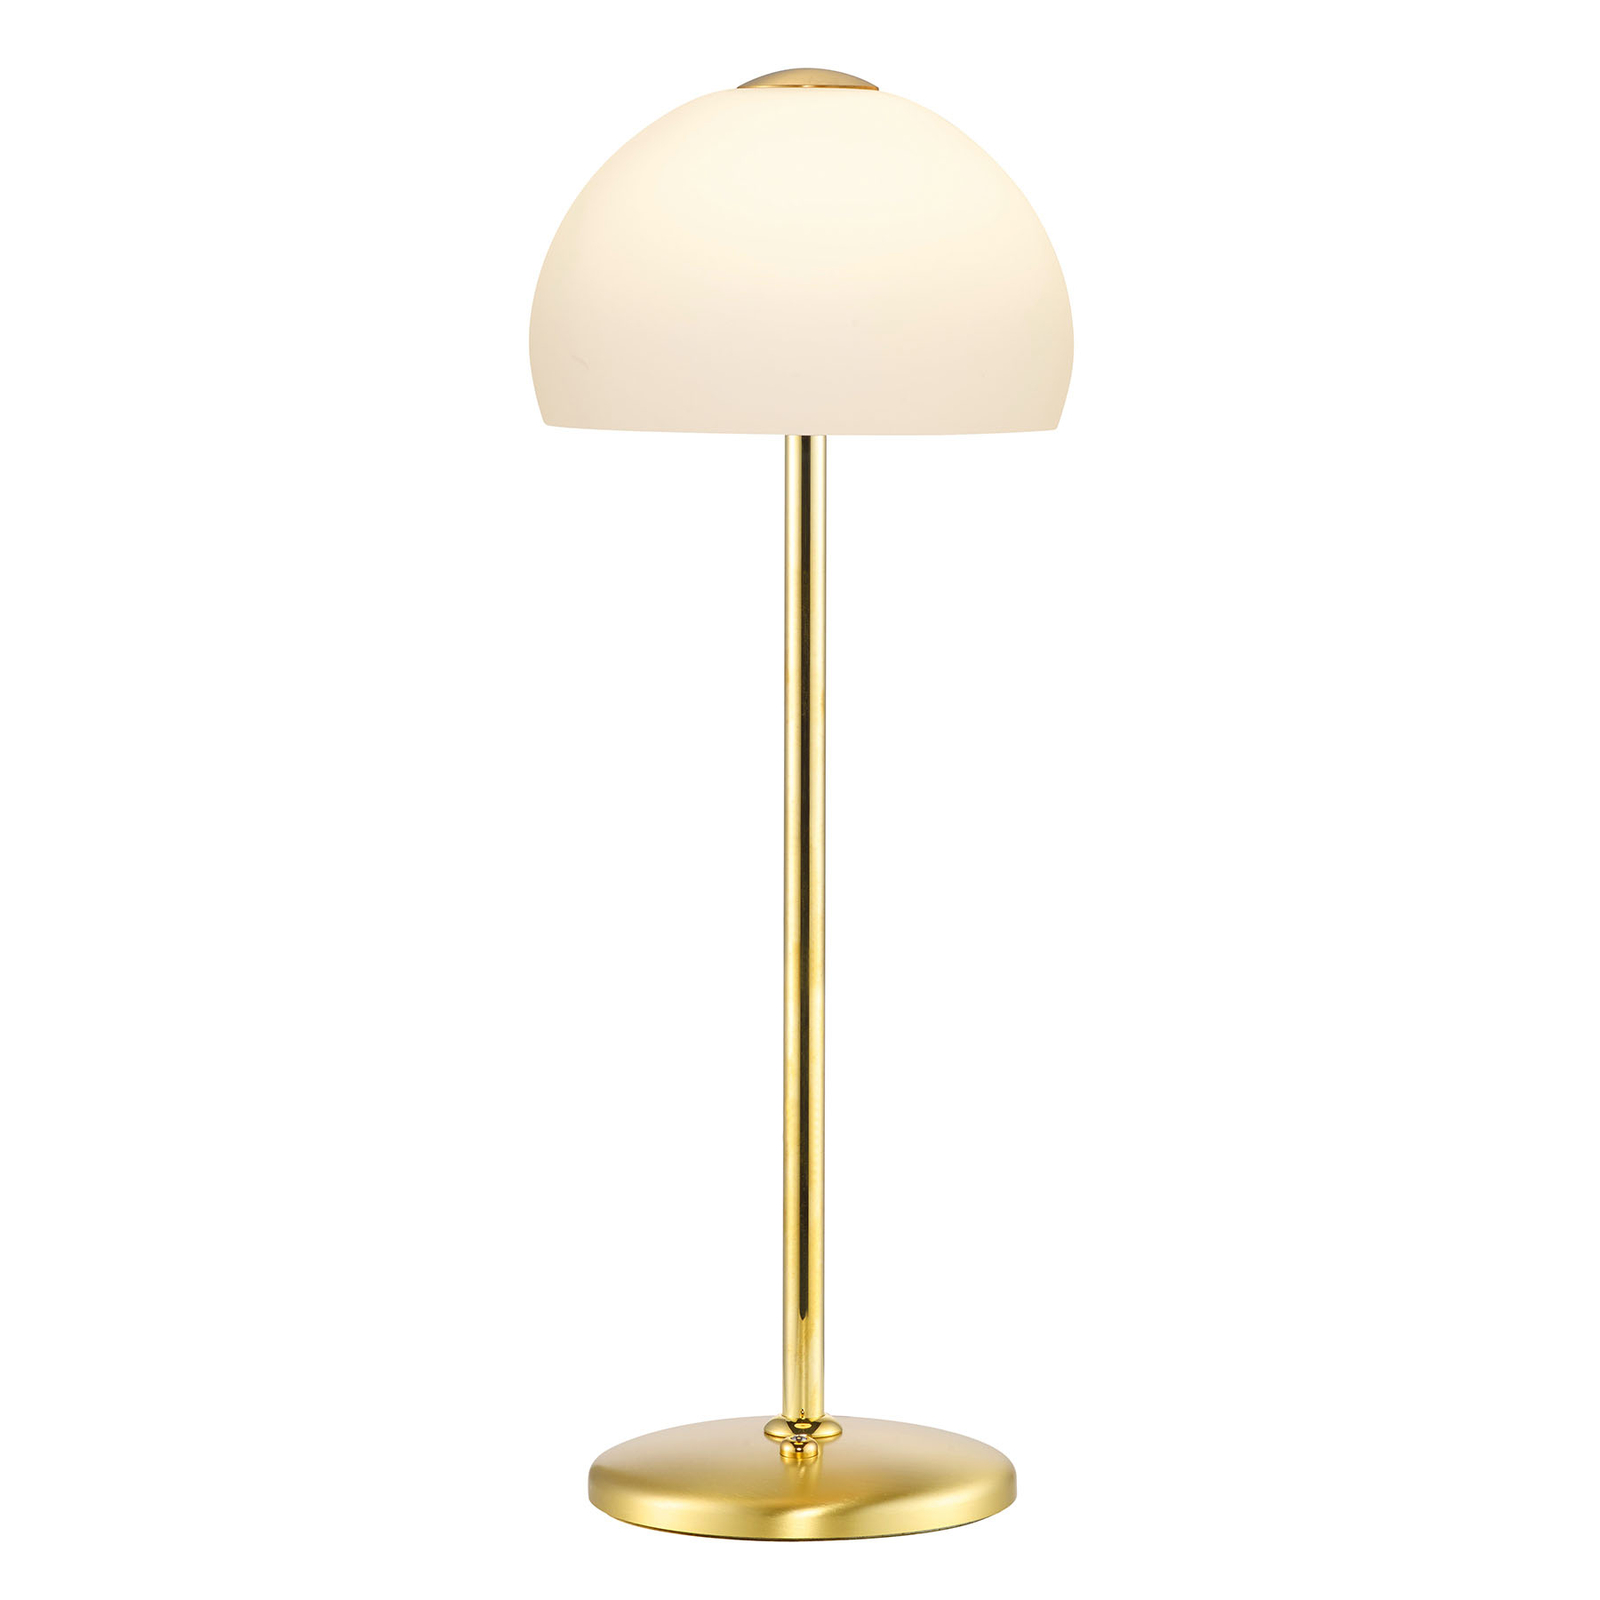 BANKAMP Meisterwerke lampada da tavolo ottone 43cm